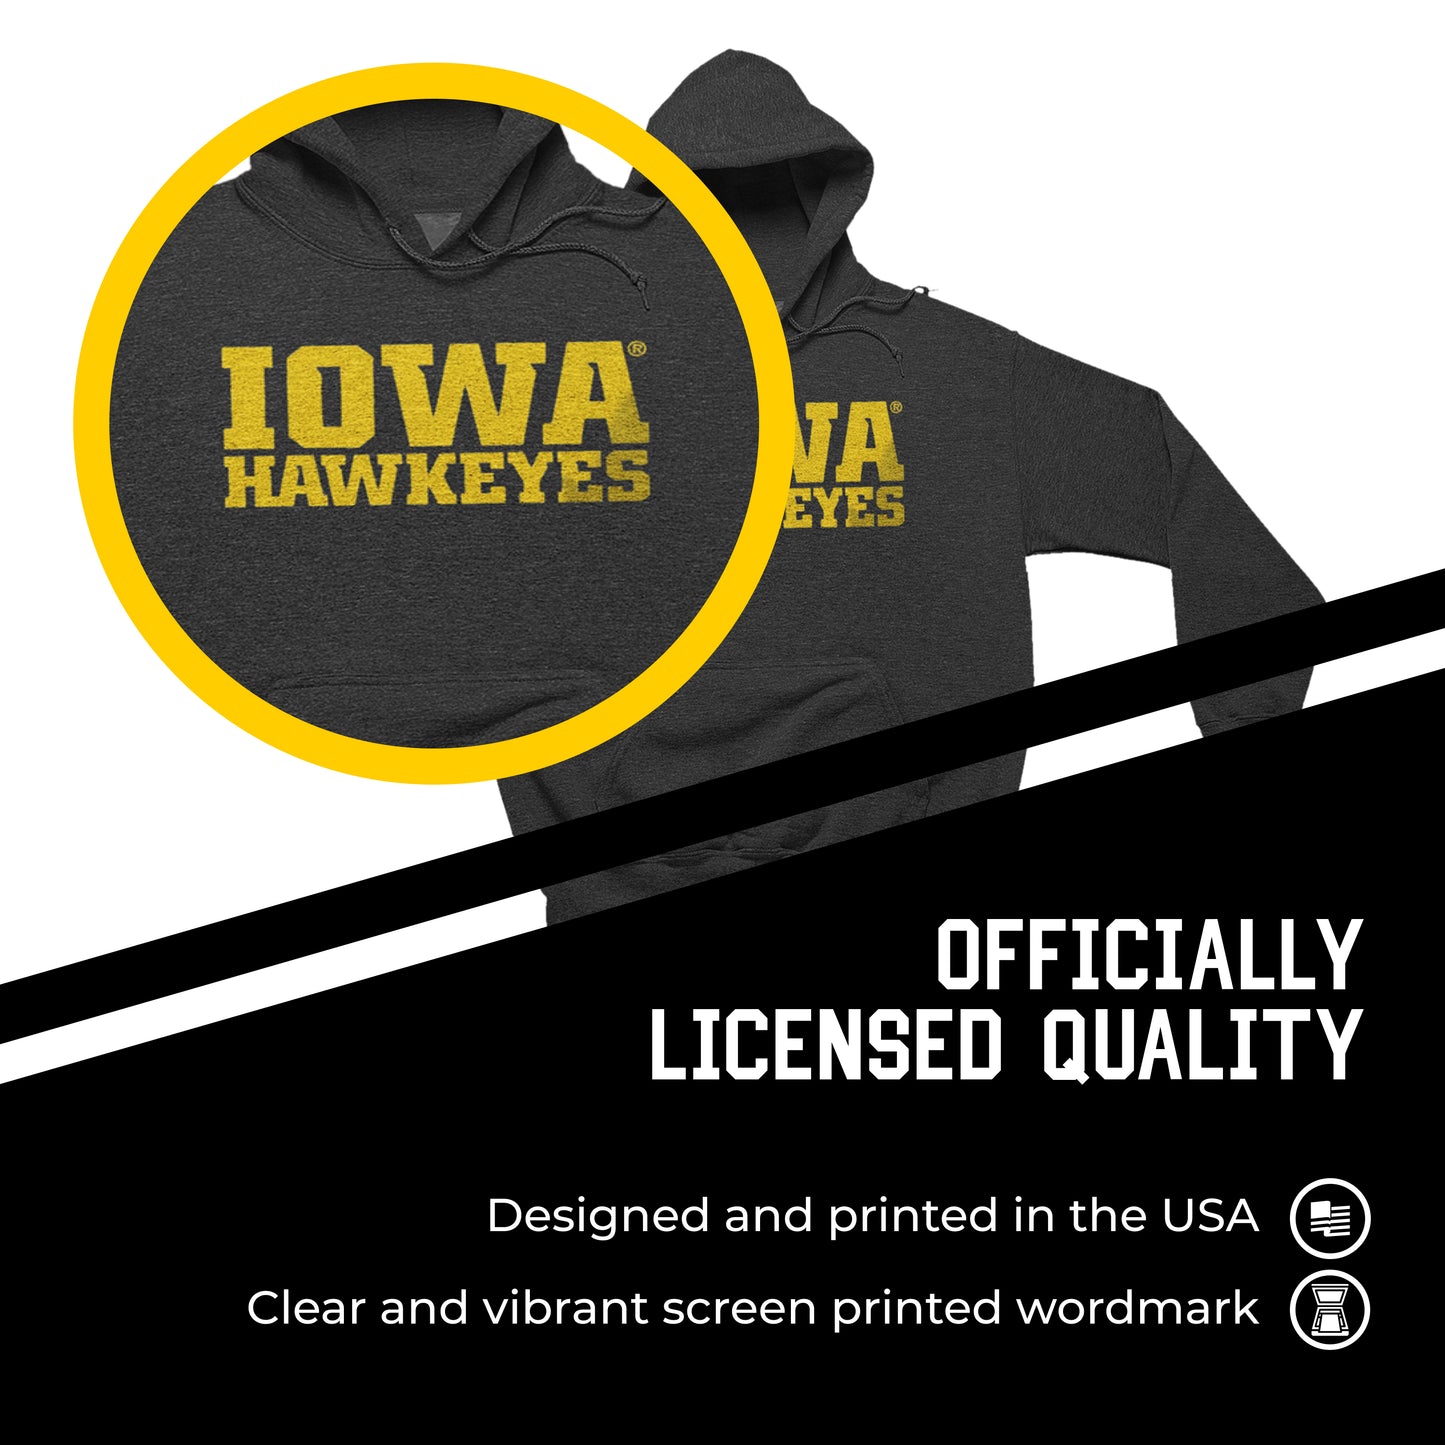 Iowa Hawkeyes NCAA Adult Cotton Blend Charcoal Hooded Sweatshirt - Charcoal